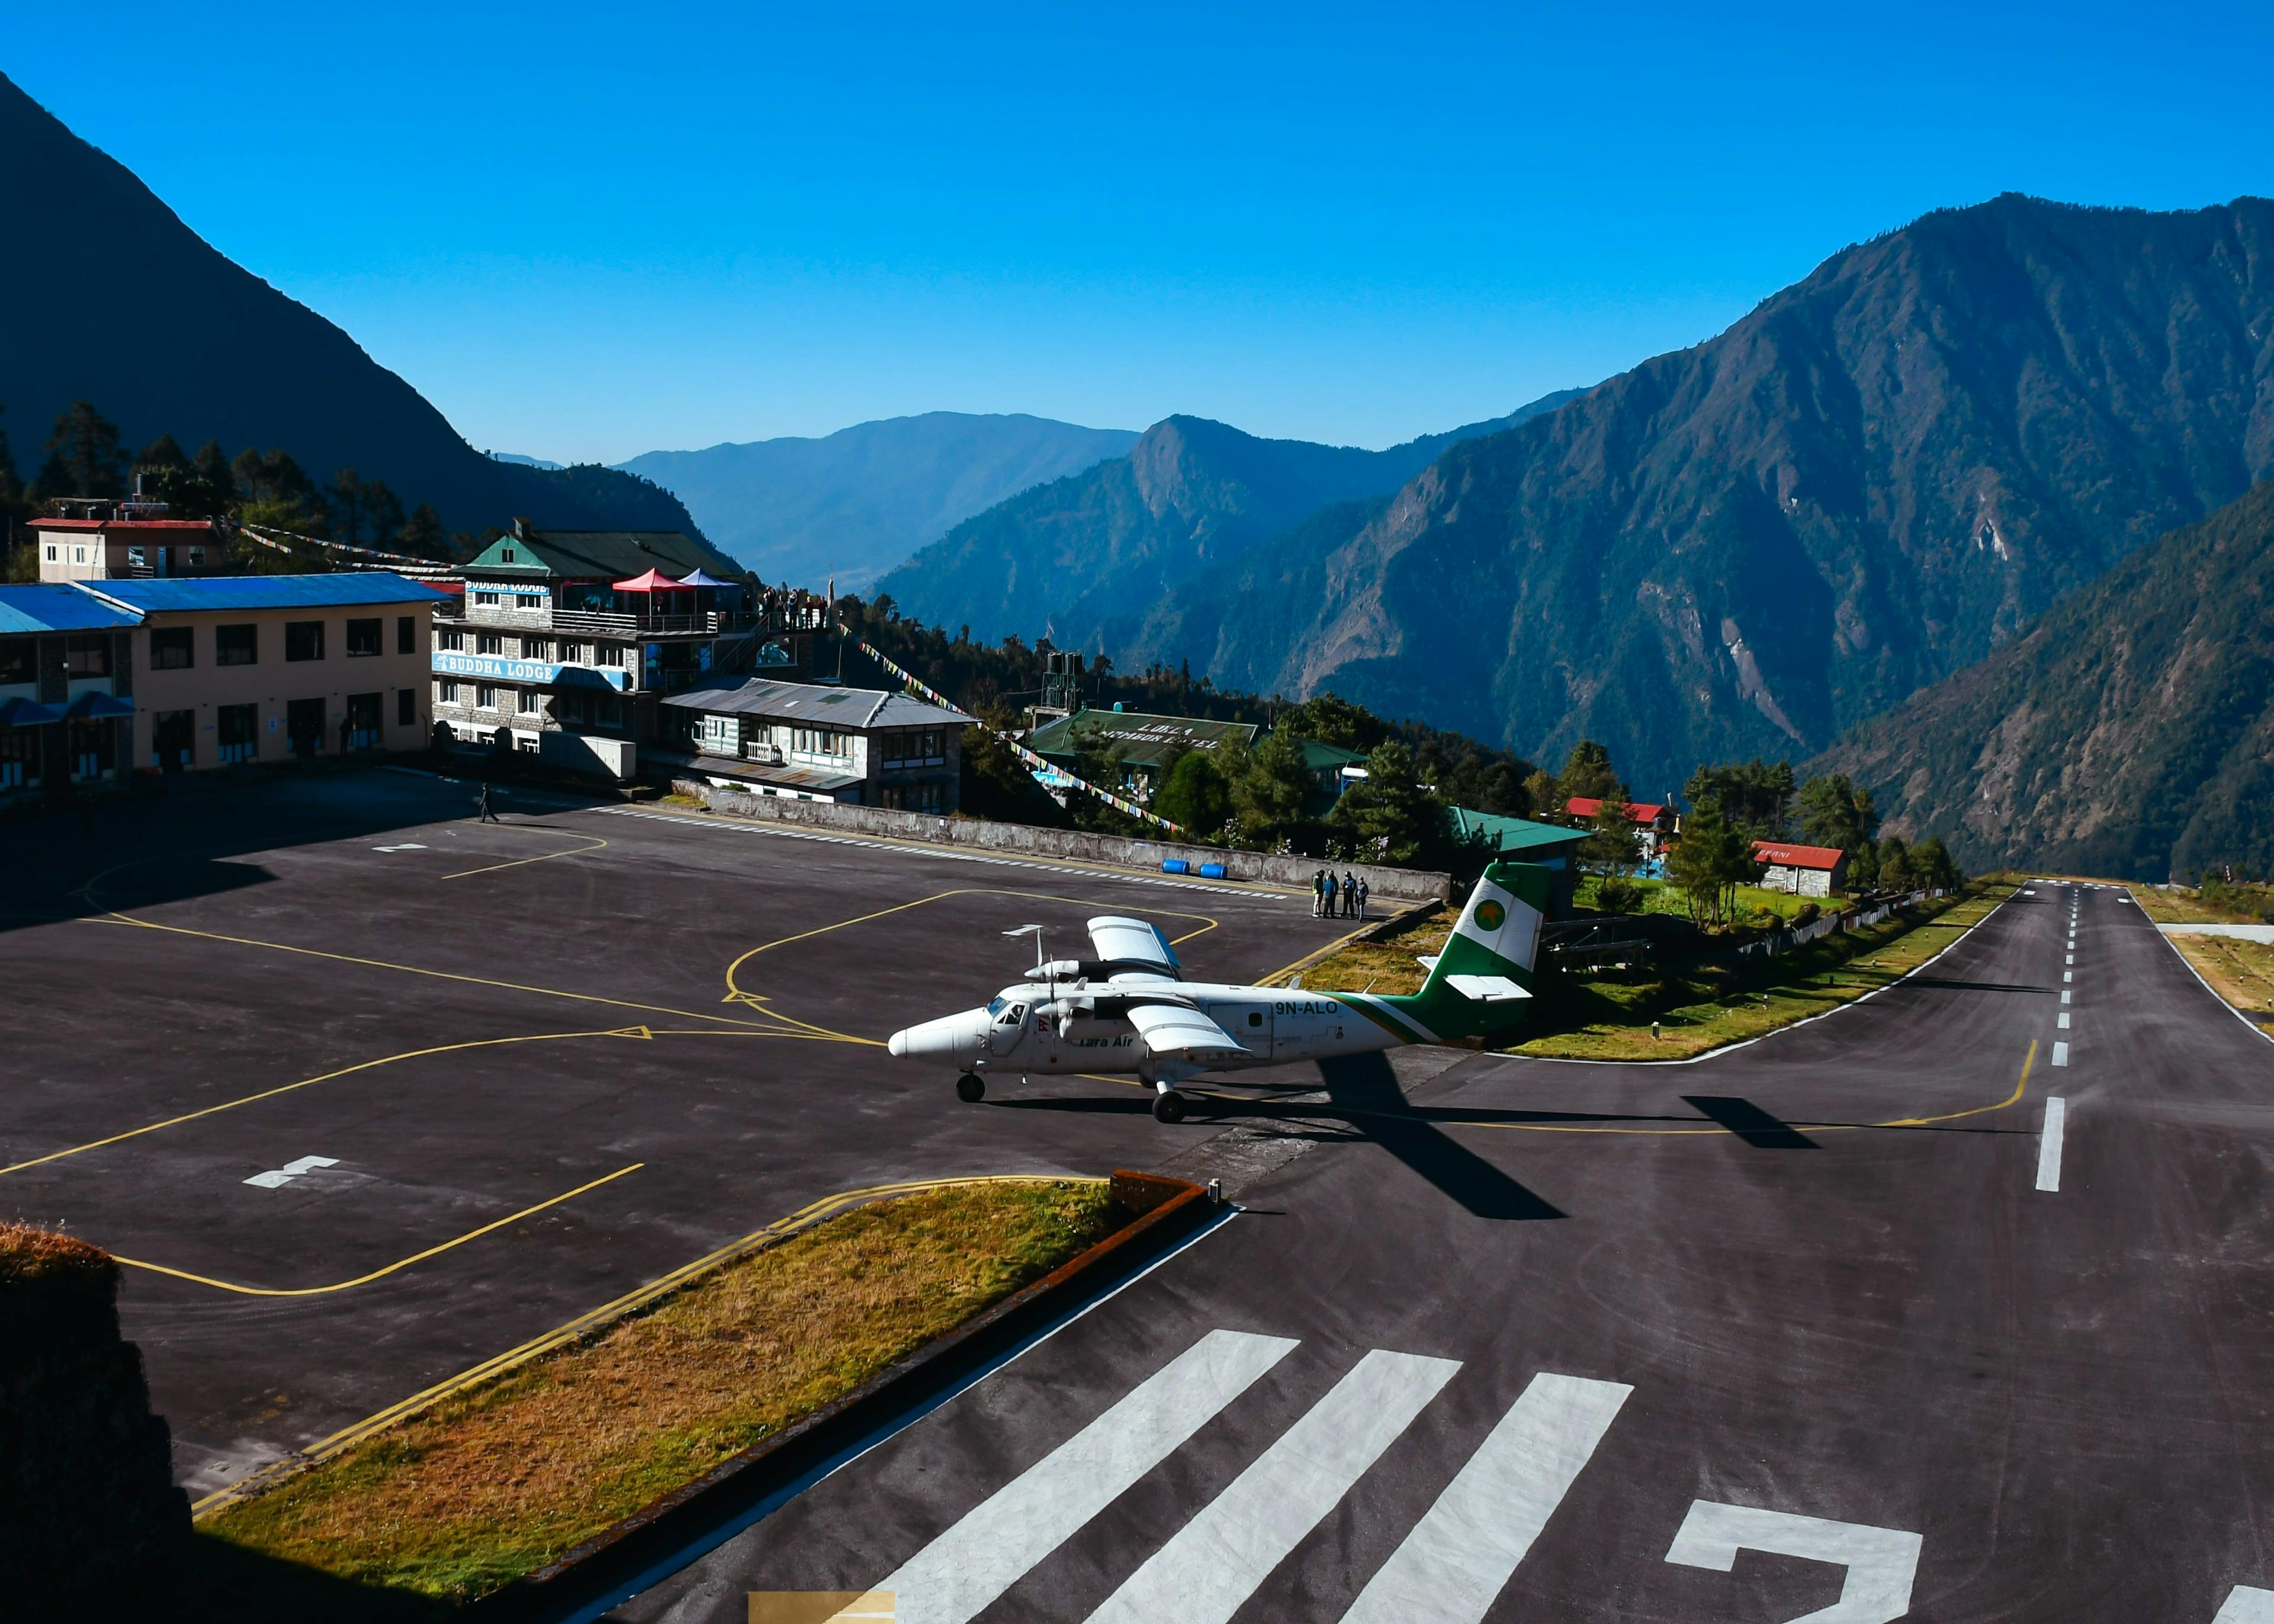 Tenzing-Hillary Airport (Lukla Airport): Gateway to the Himalayas